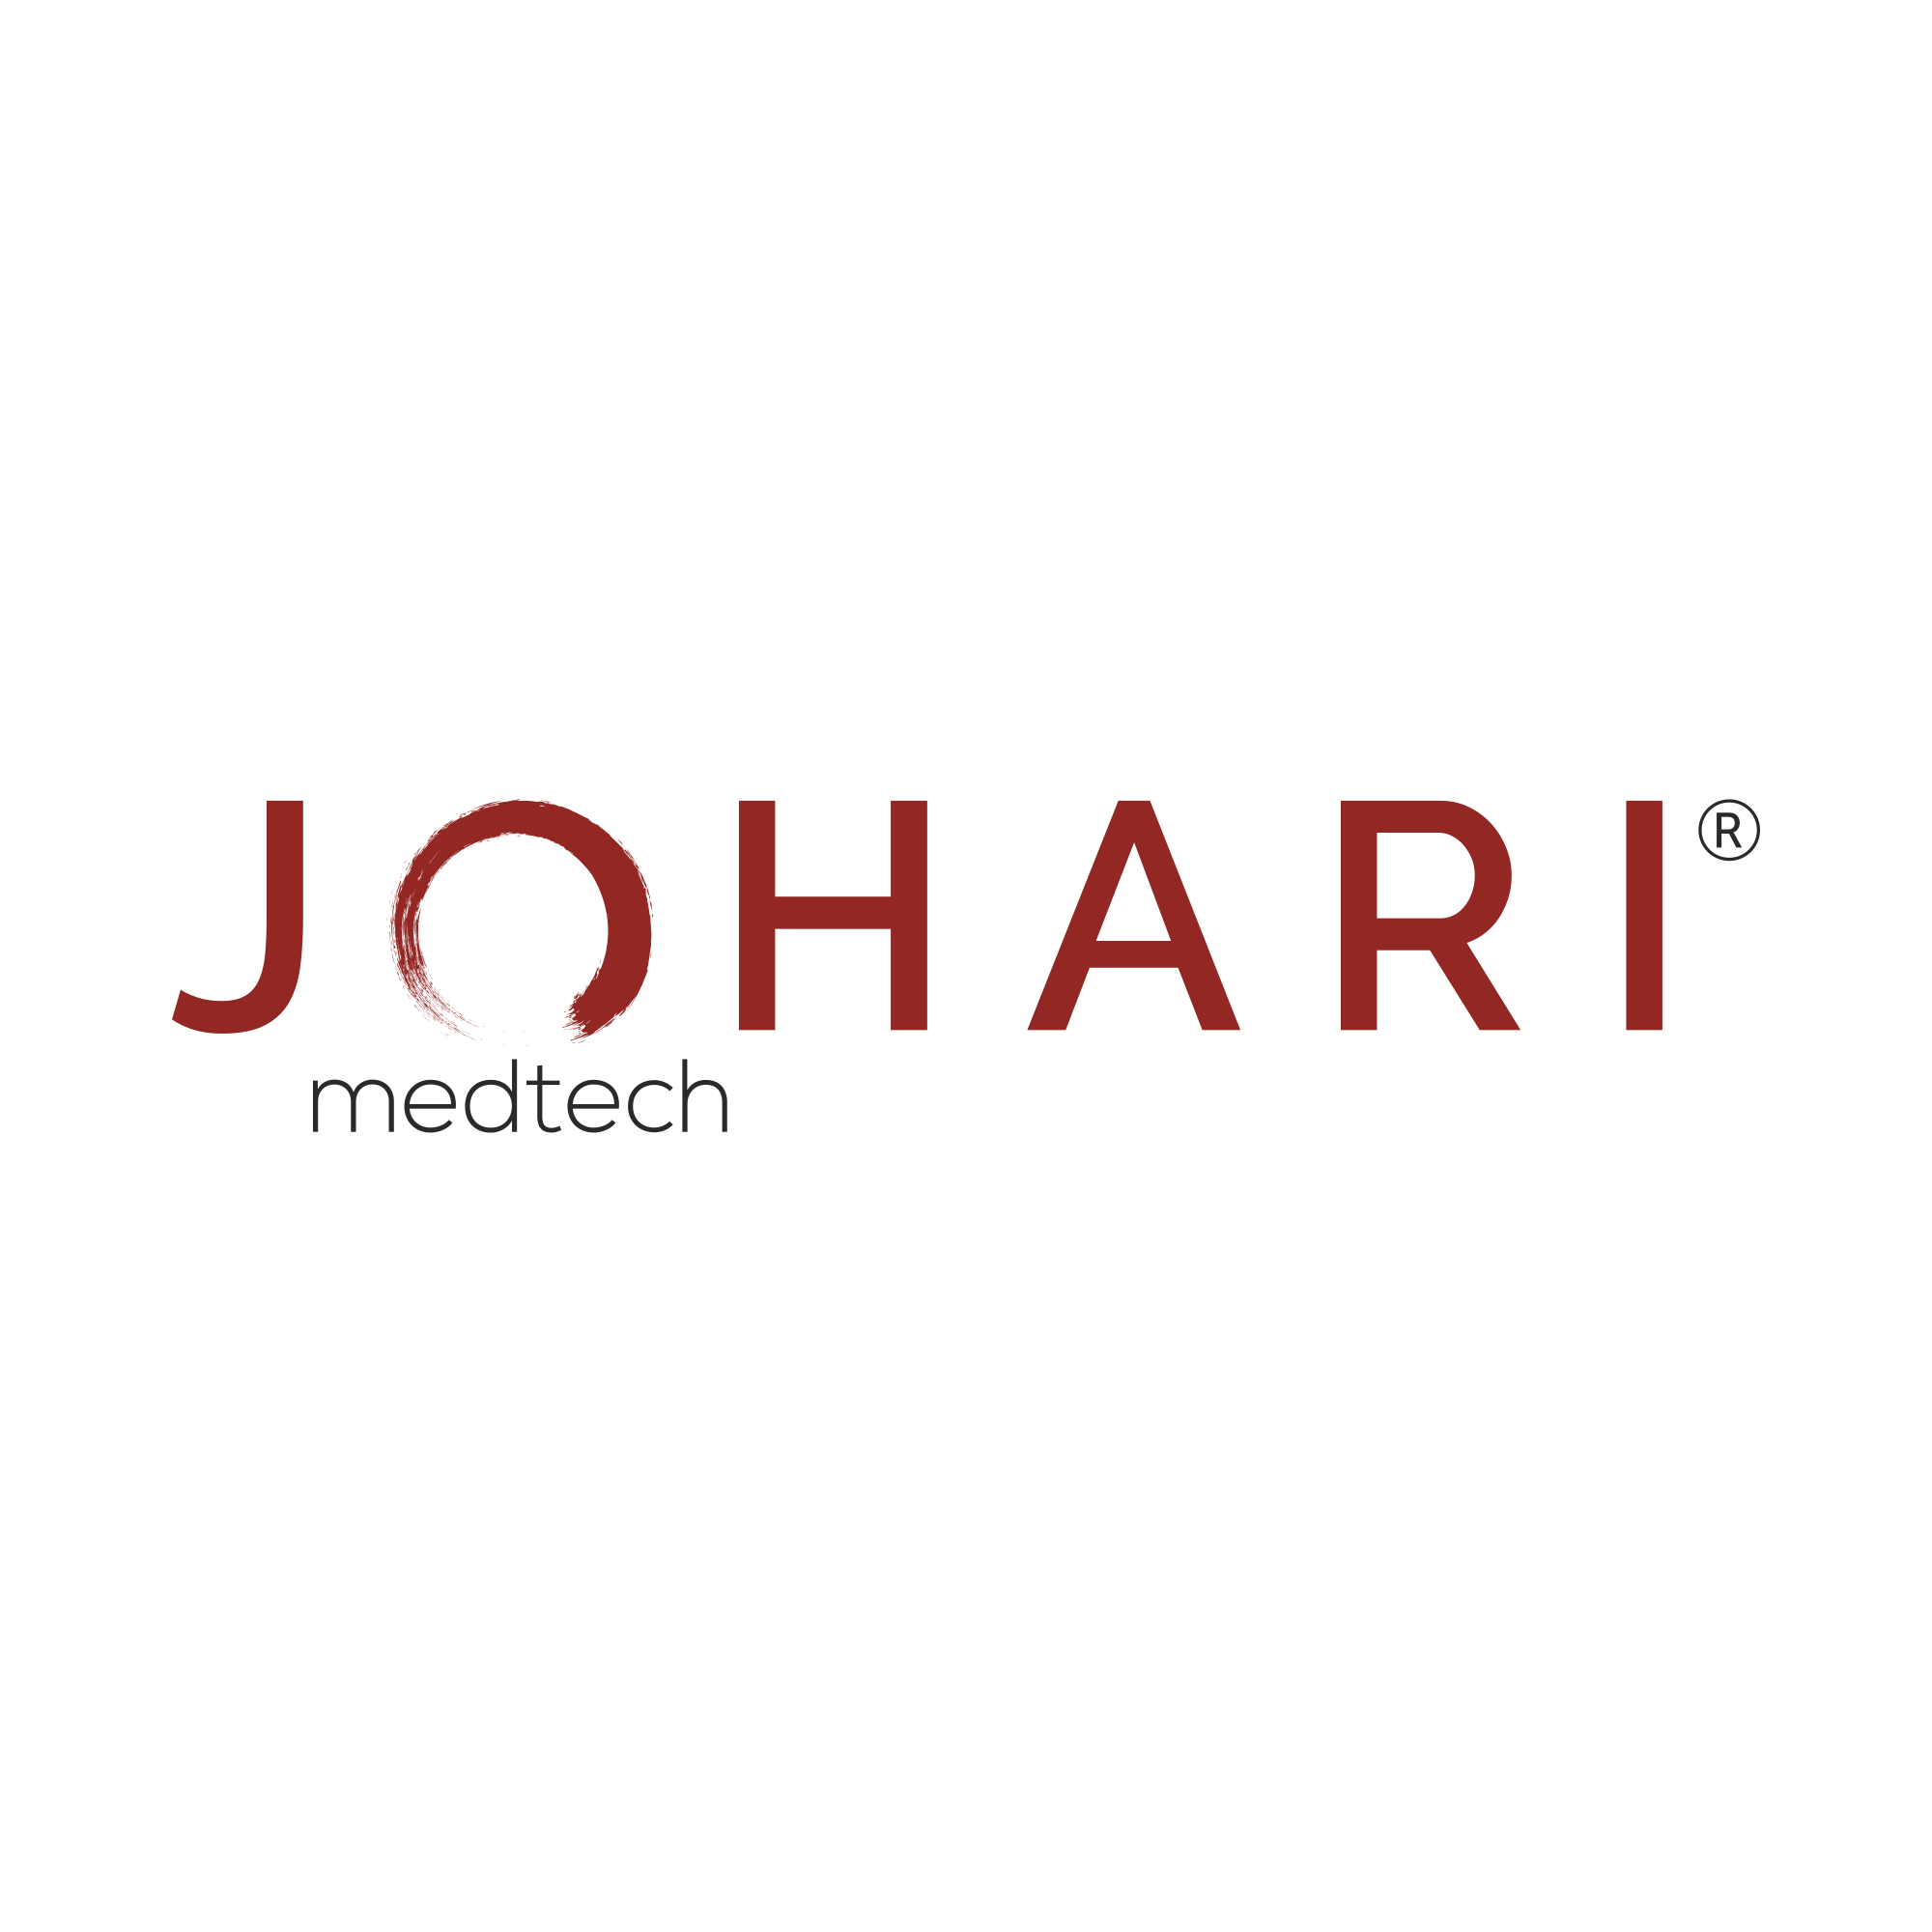 Johari Digital HealthCare Ltd